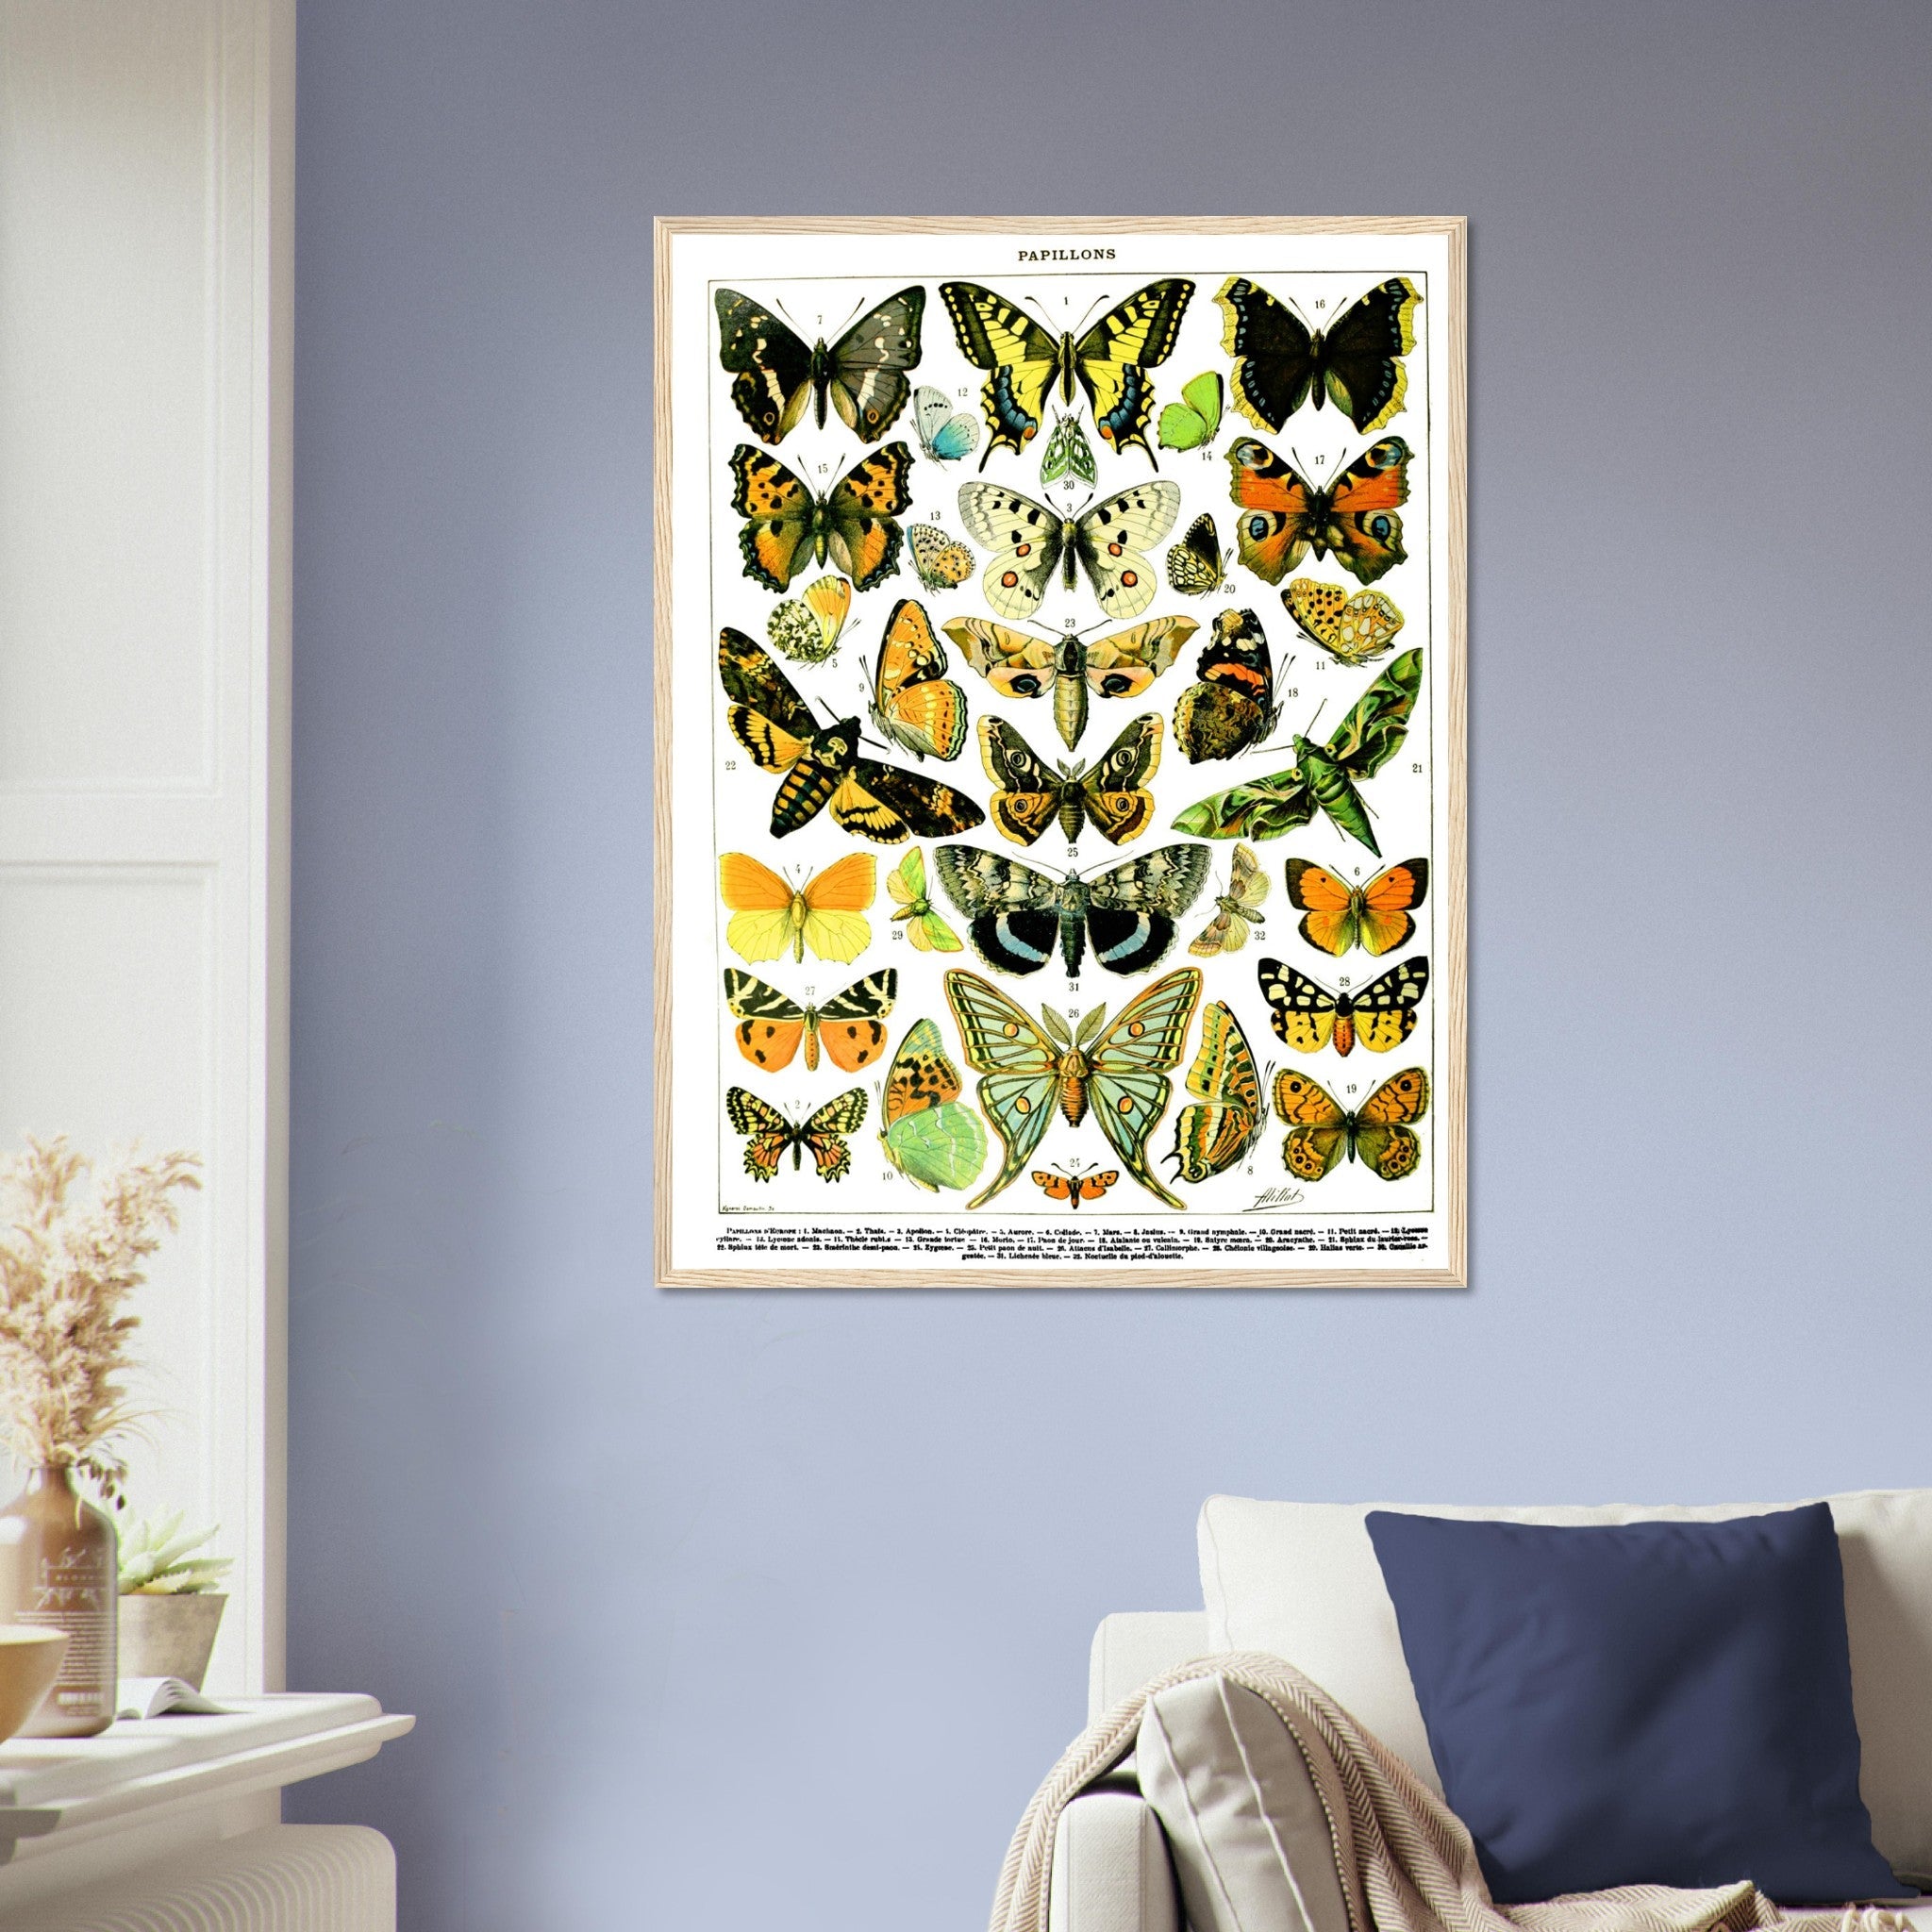 Vintage Butterfly Framed, Adolphe Millot - Papillons (Butterfly) Framed Print UK, EU USA Domestic Shipping - WallArtPrints4U